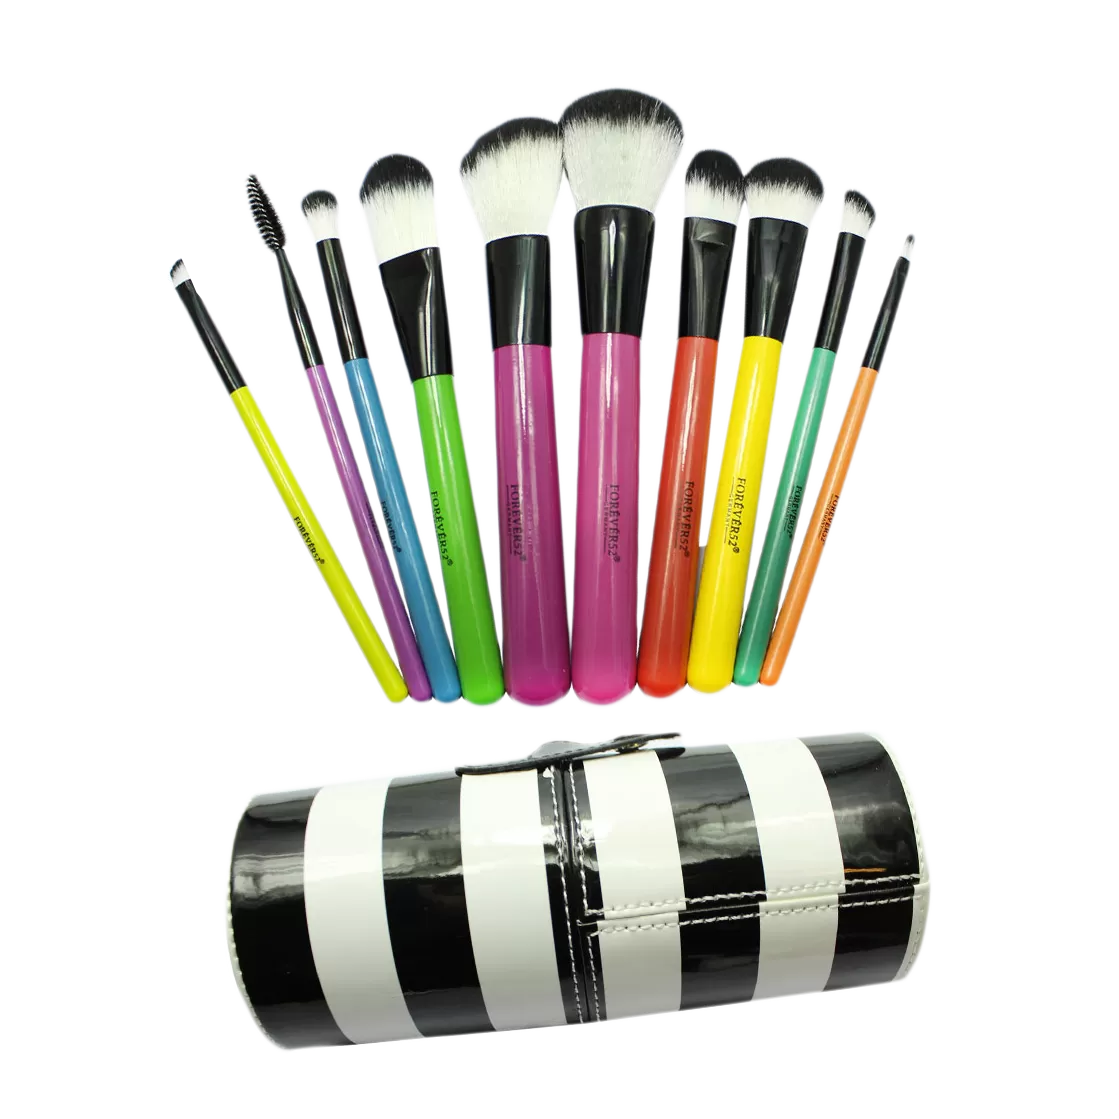 ست براش فوراور 52  10 Pcs Colorful Brushes – X046 اورجینال + (تخفیف)